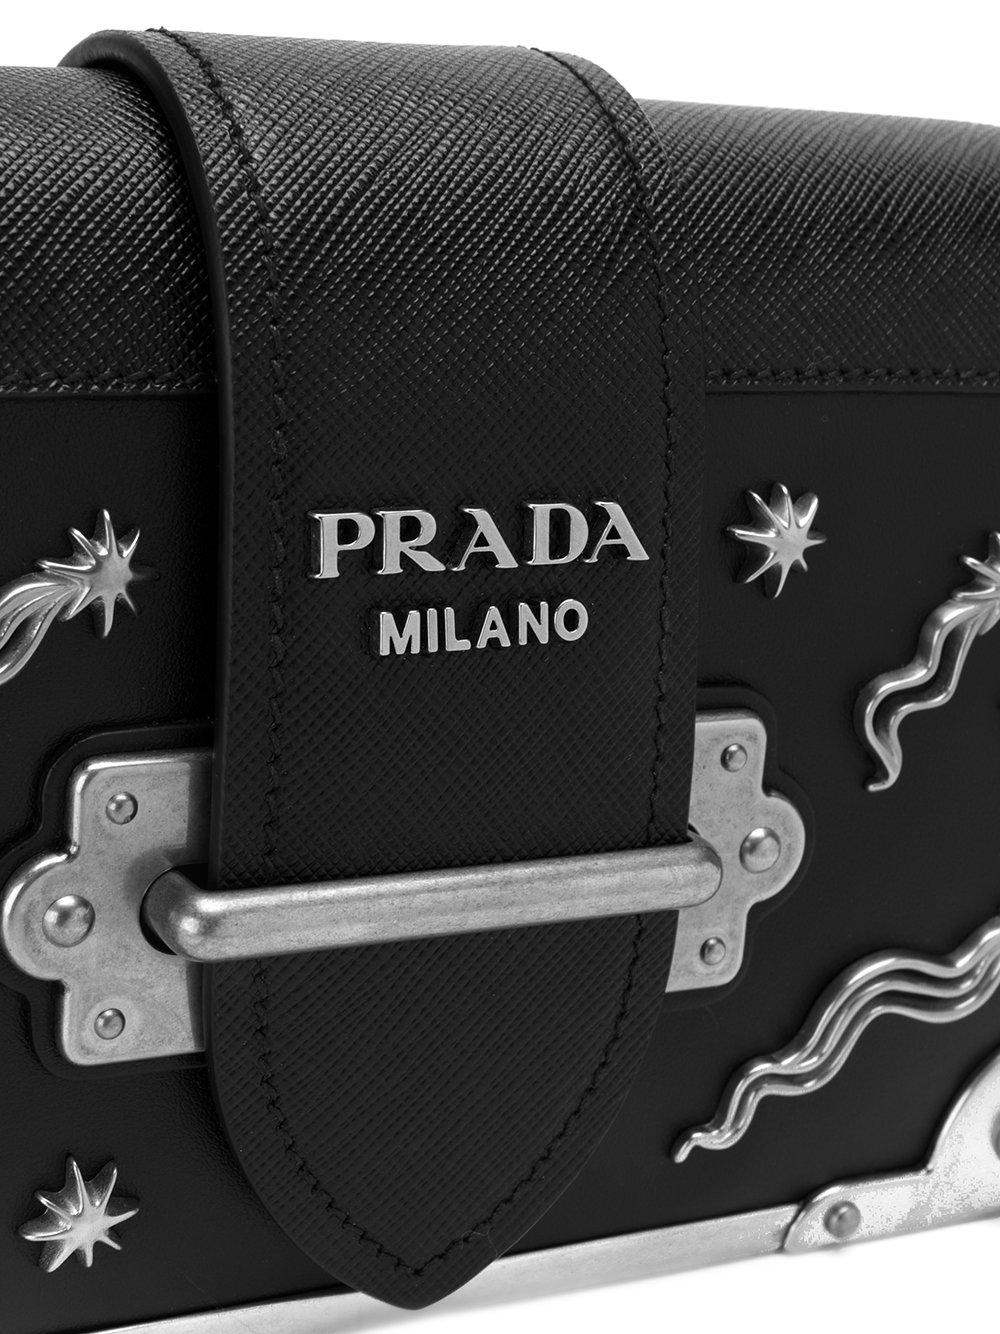 prada milano moon and stars bag